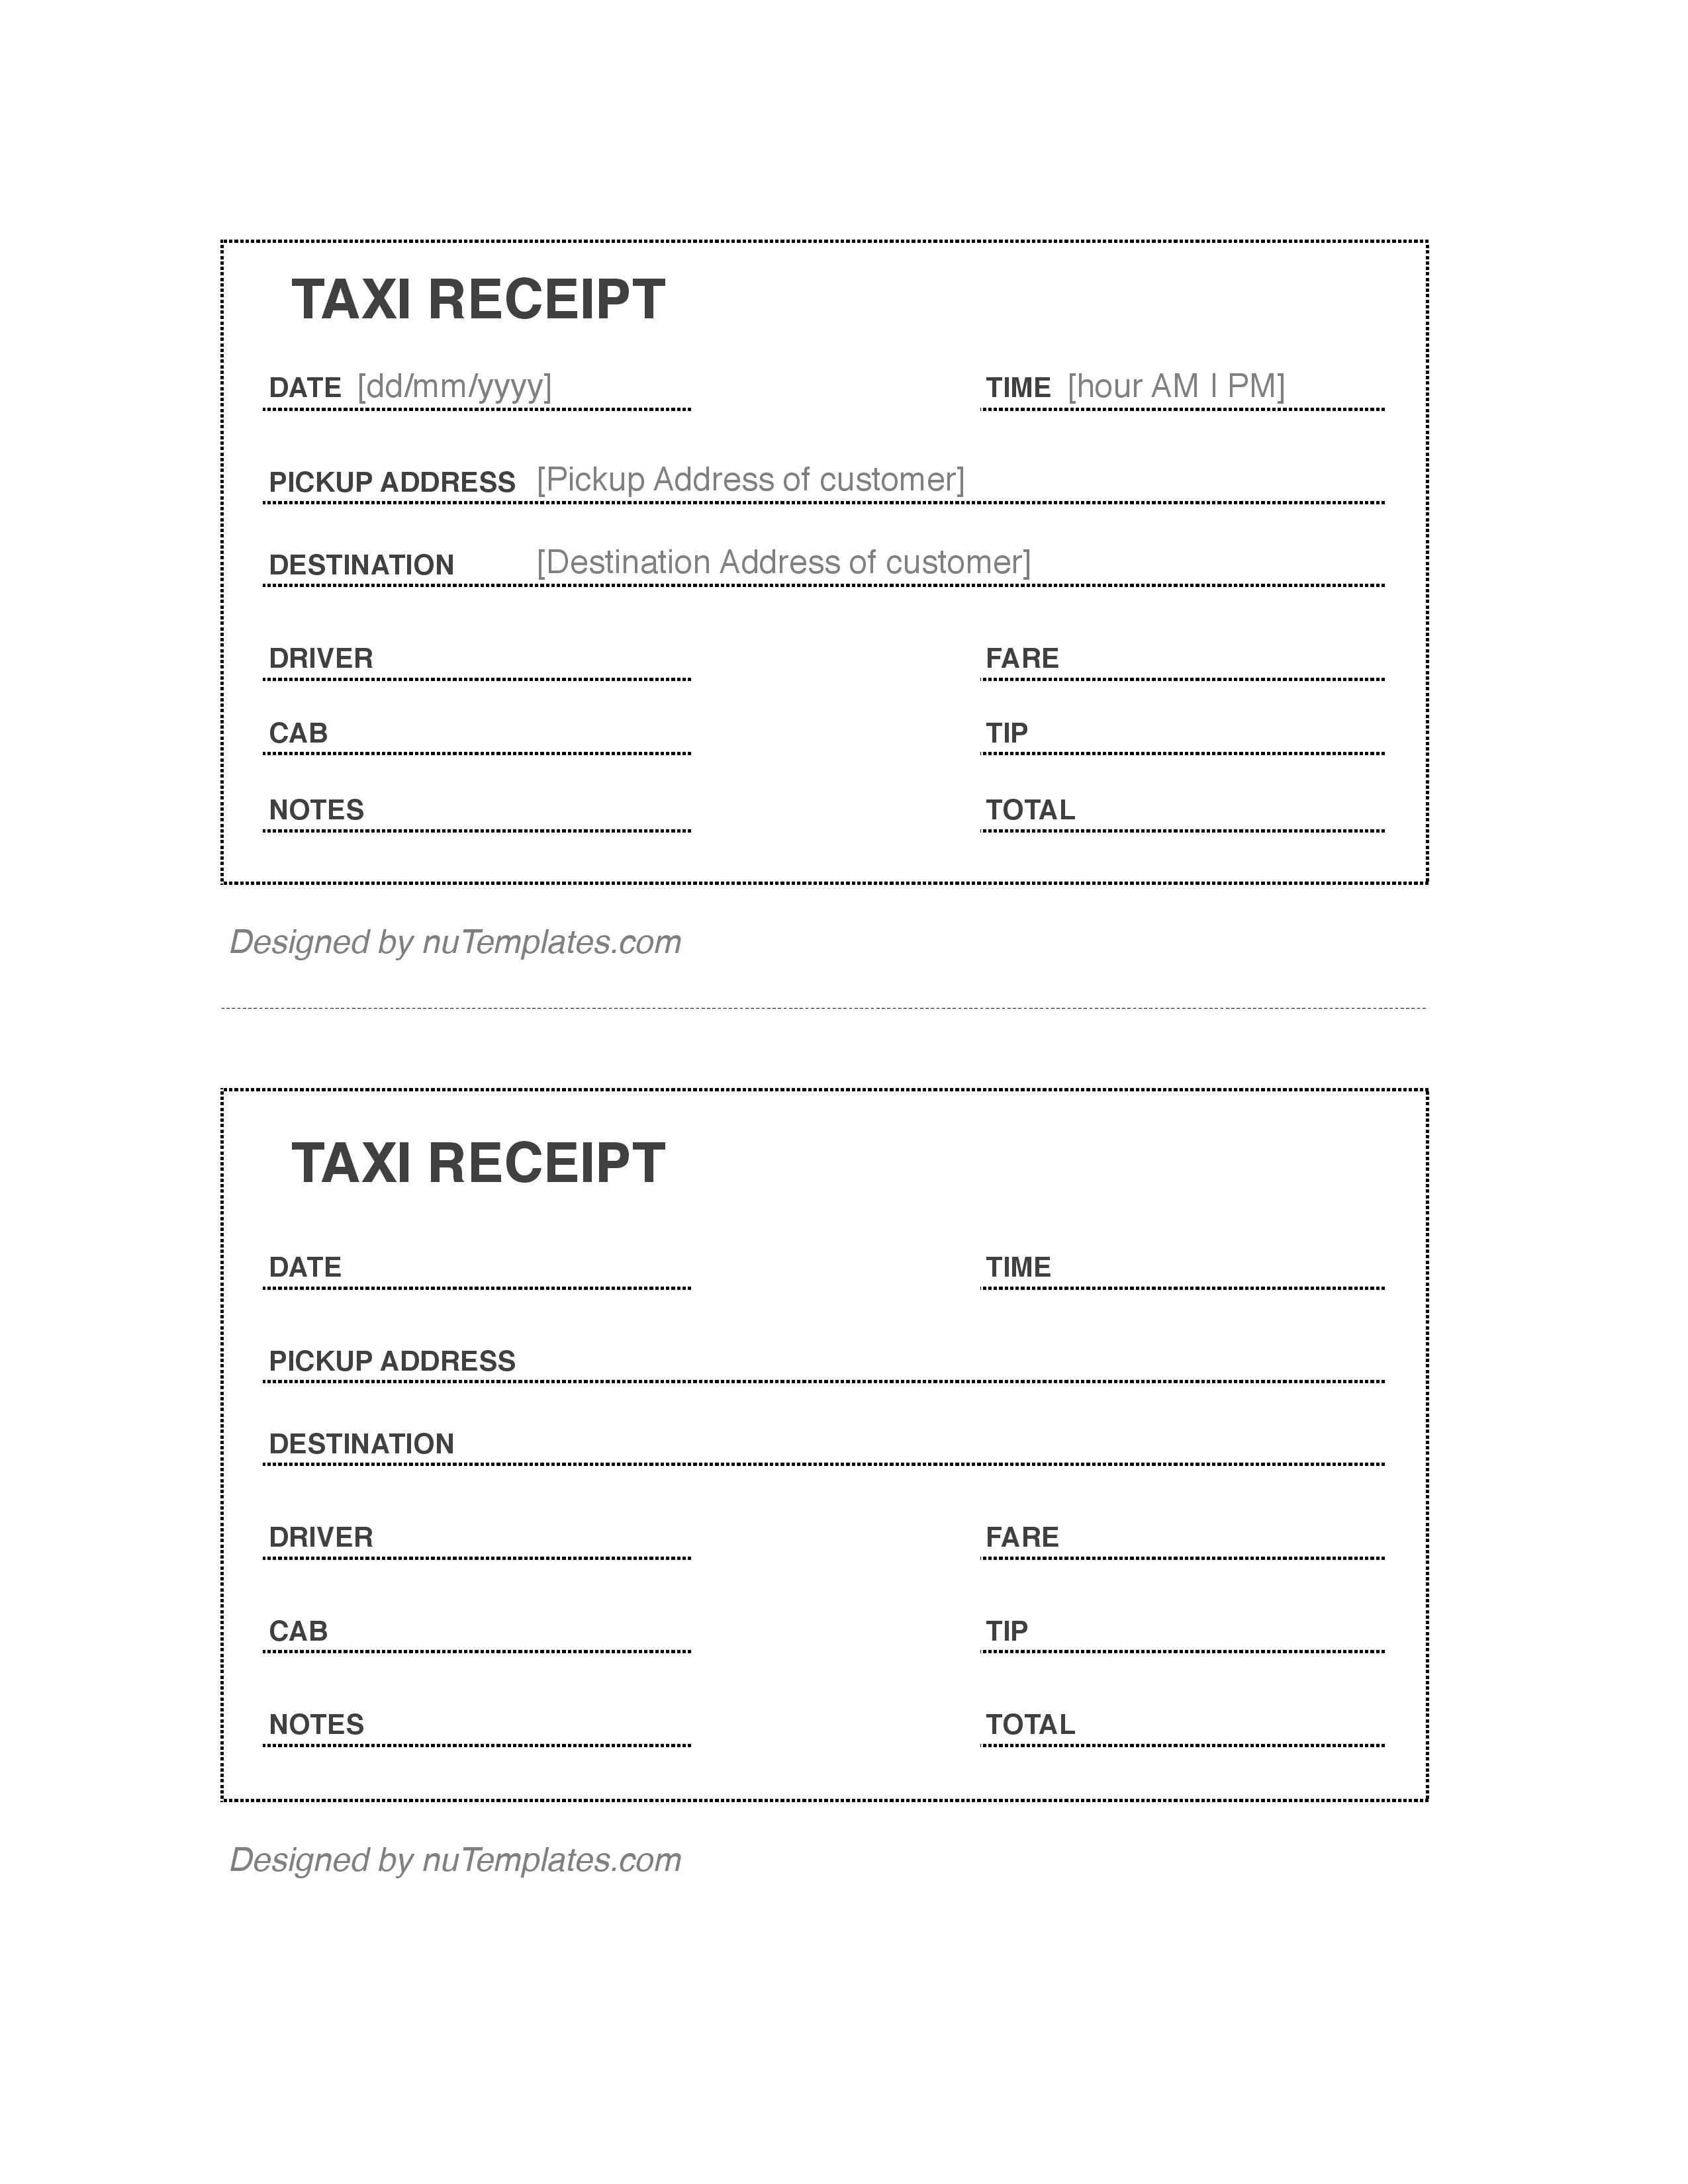 Taxi Receipt Template Taxi Receipts nuTemplates